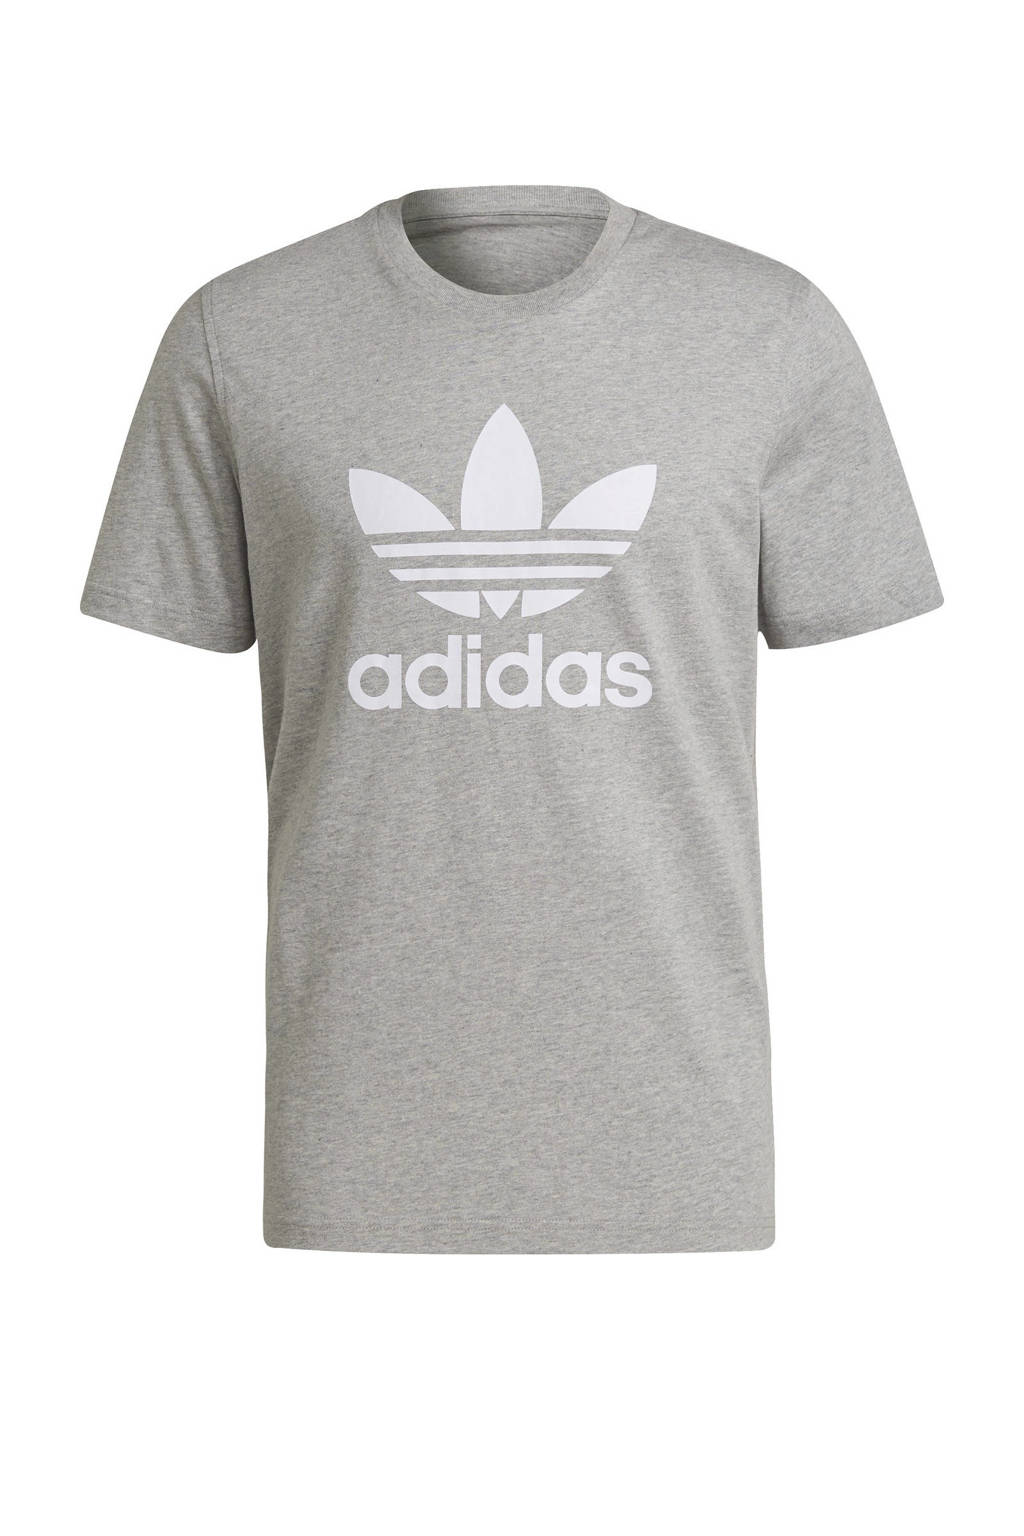 adidas Originals Adicolor T-shirt grijs melange/wit